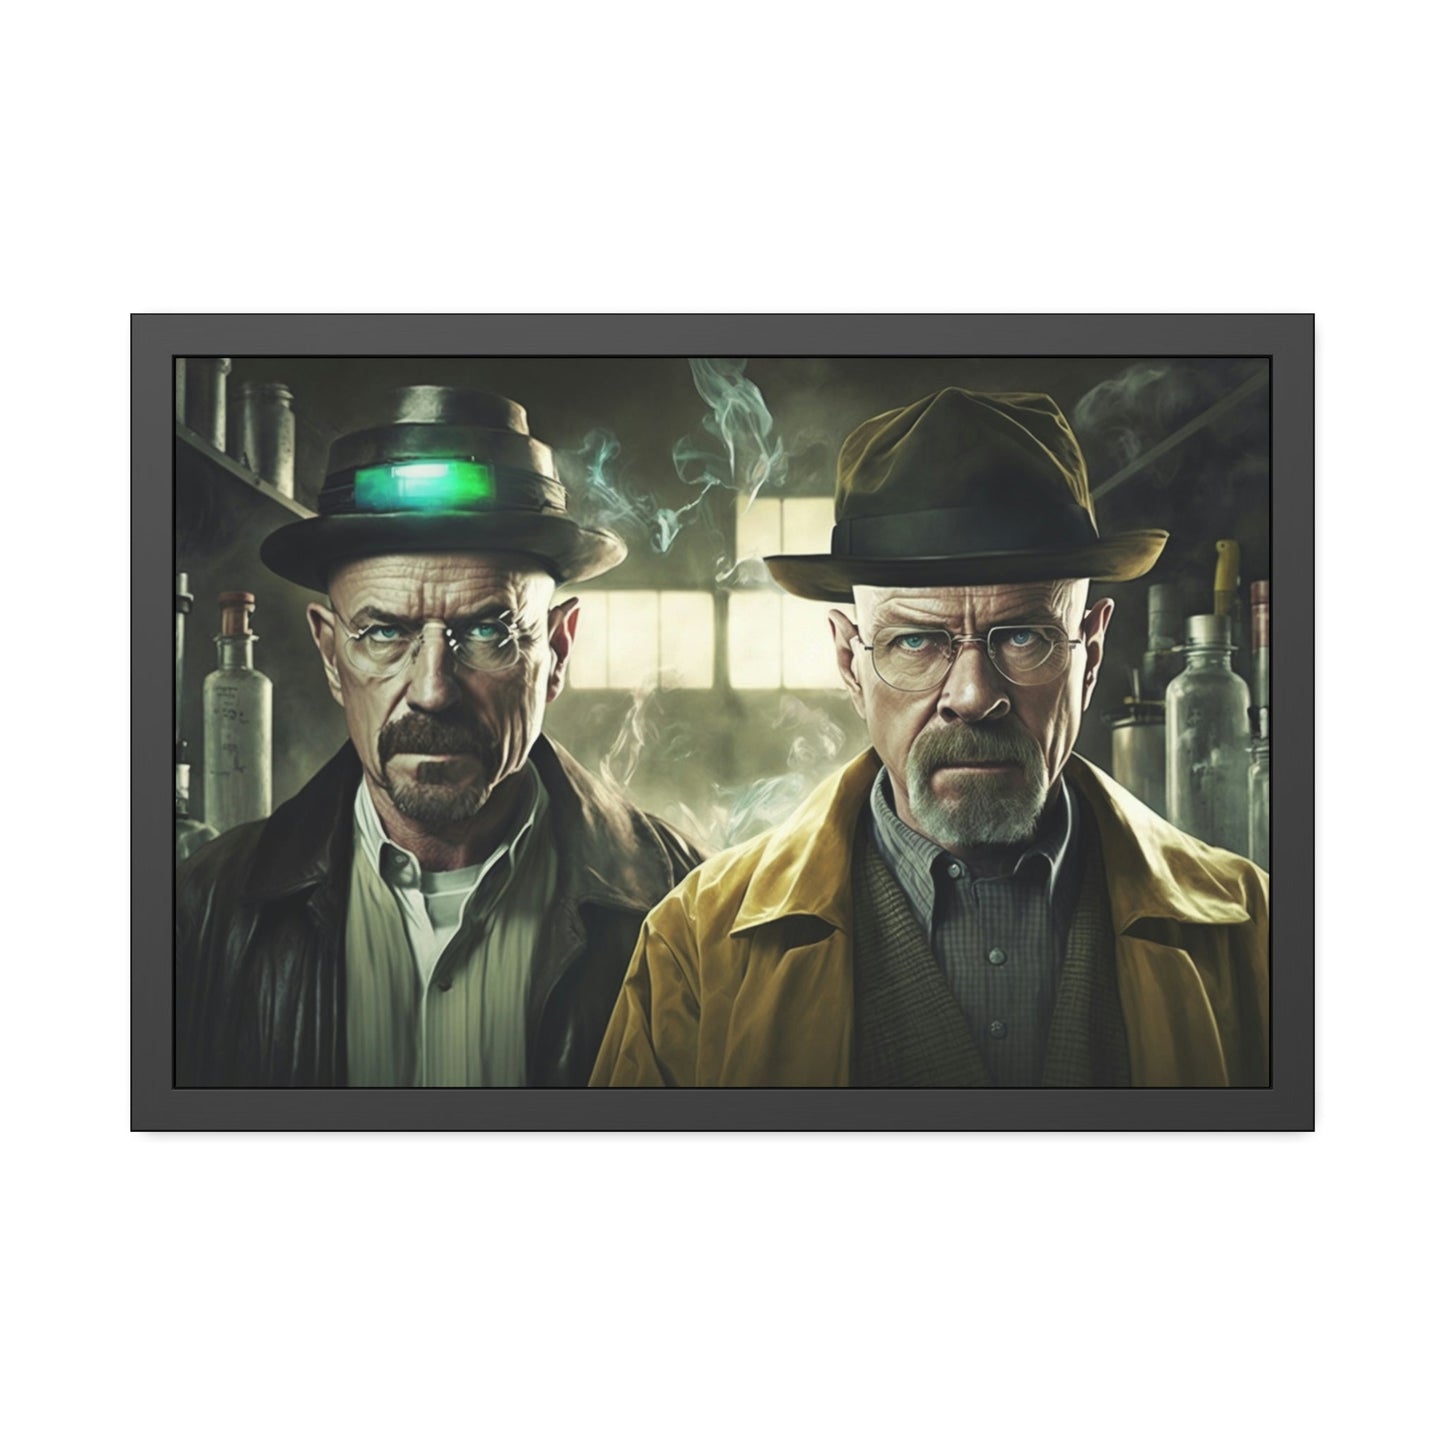 Heisenberg's Legacy: Iconic Breaking Bad Artwork on Canvas